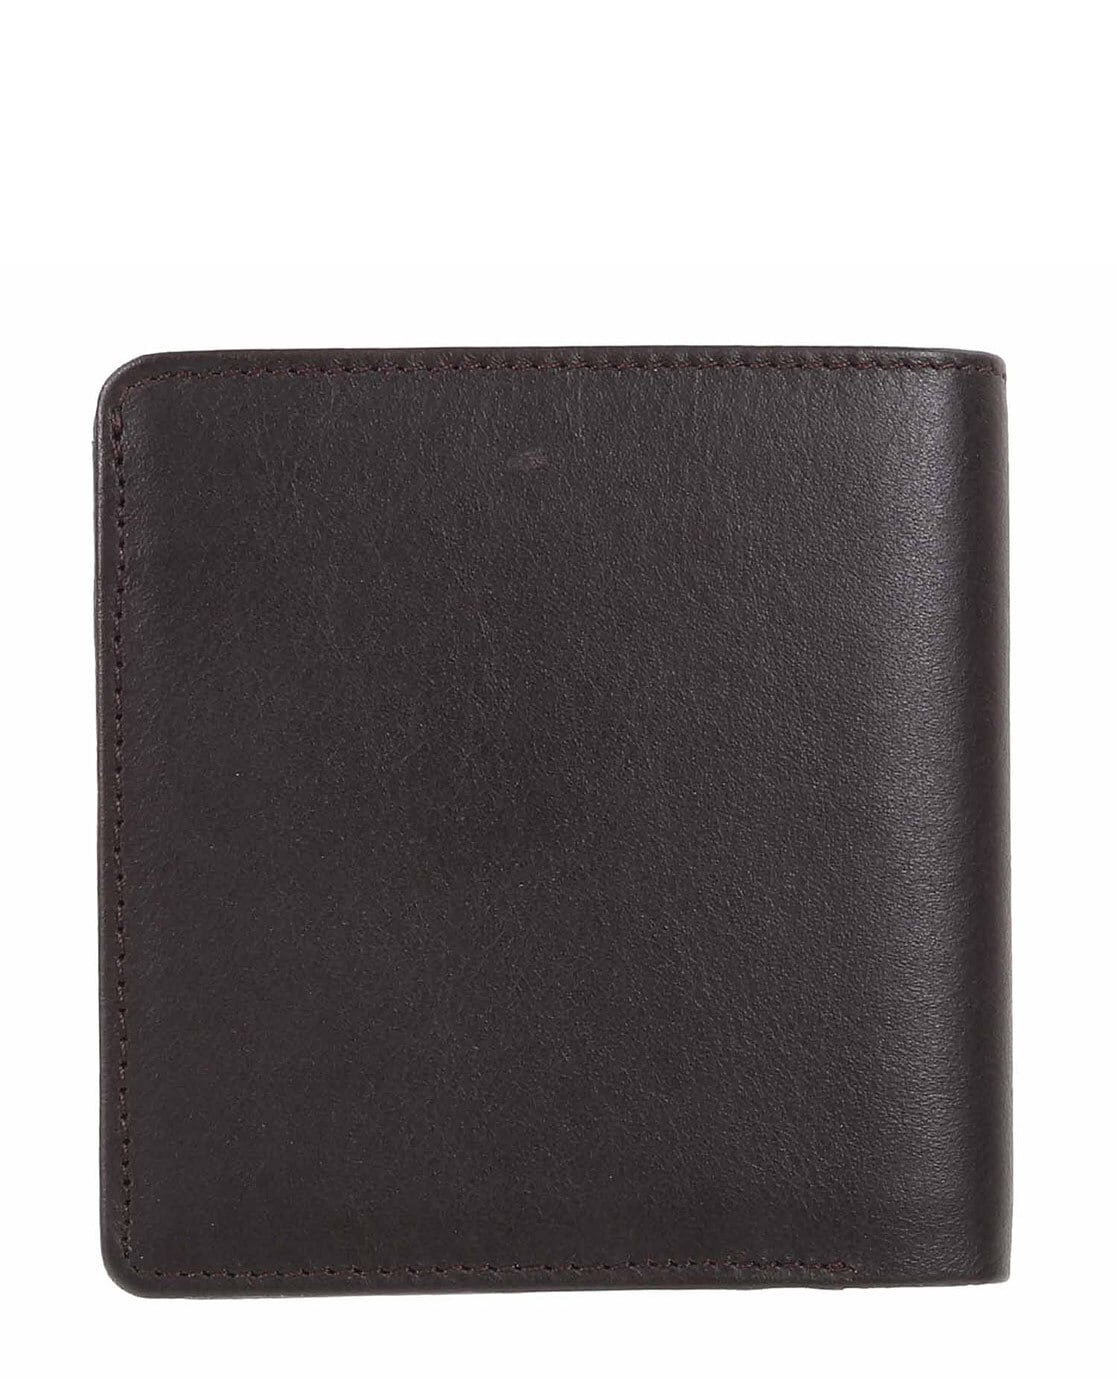 Buy Goatter Men's Hunter Leather Wallet,(Brown) at Amazon.in